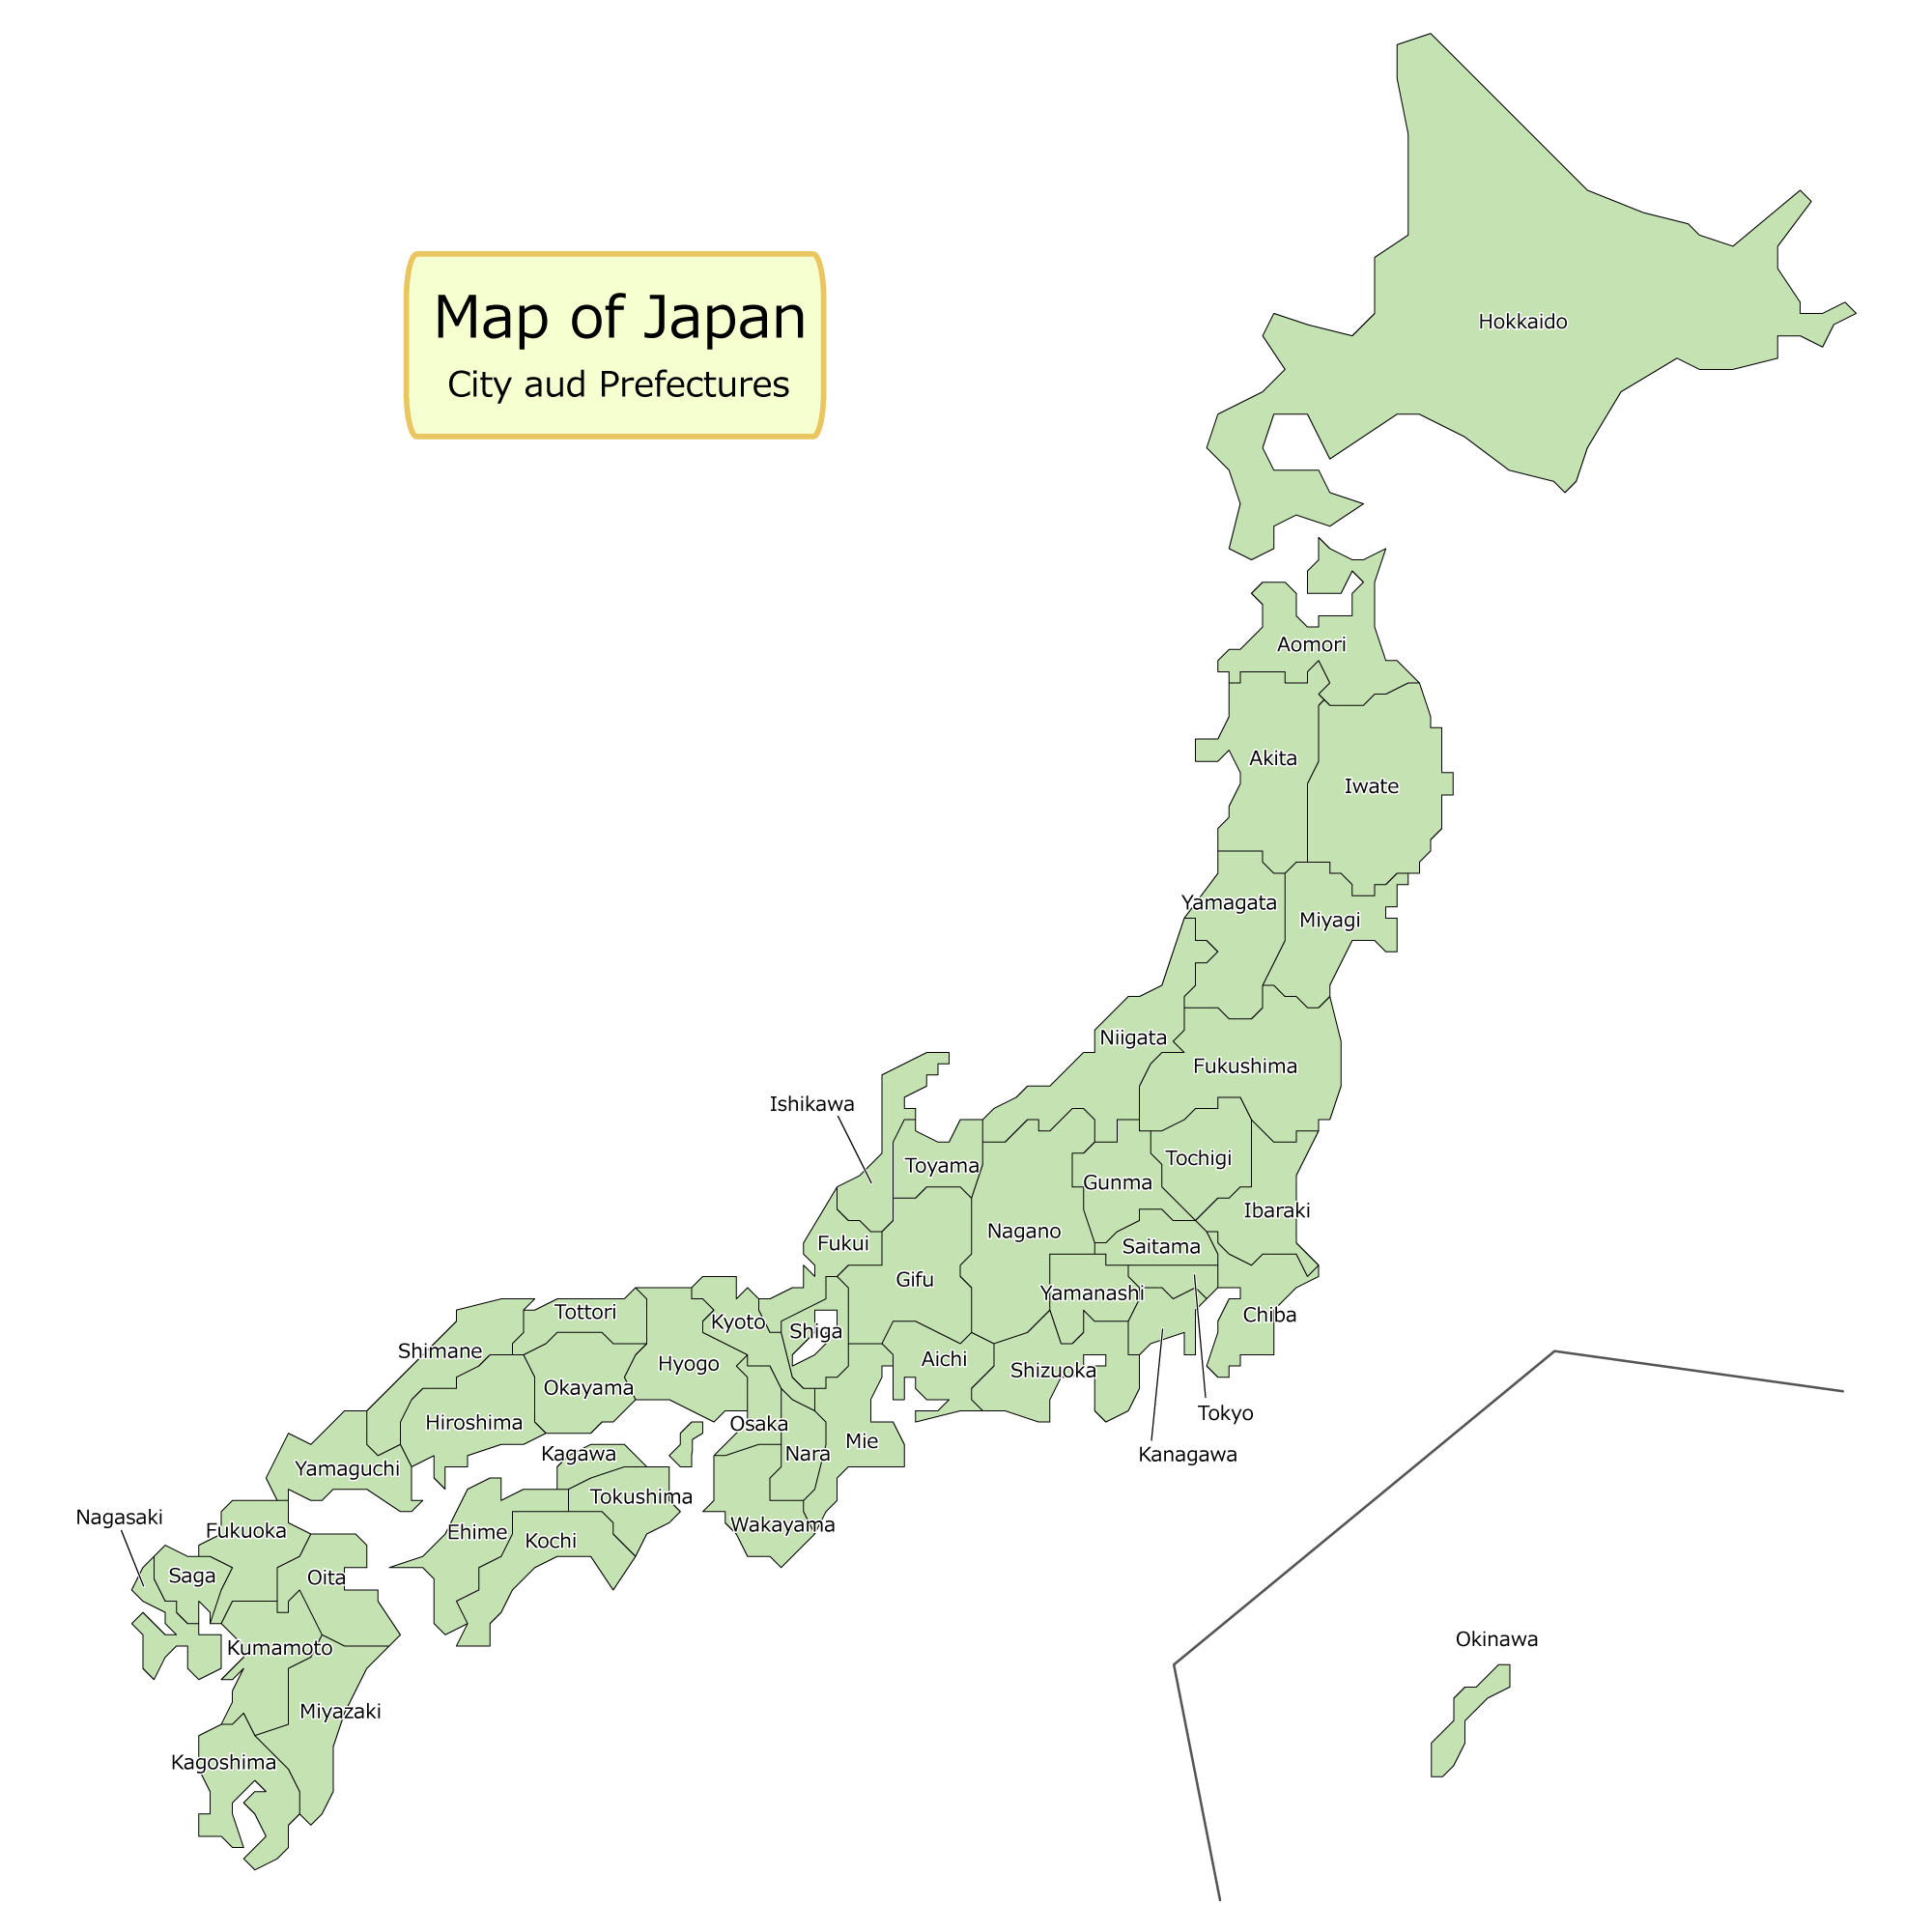 Simple Japan map in English (City and Prefectures) 英語表記の日本地図(都道府県) | マップラボ- 地図アイコンを無料ダウンロード maplab